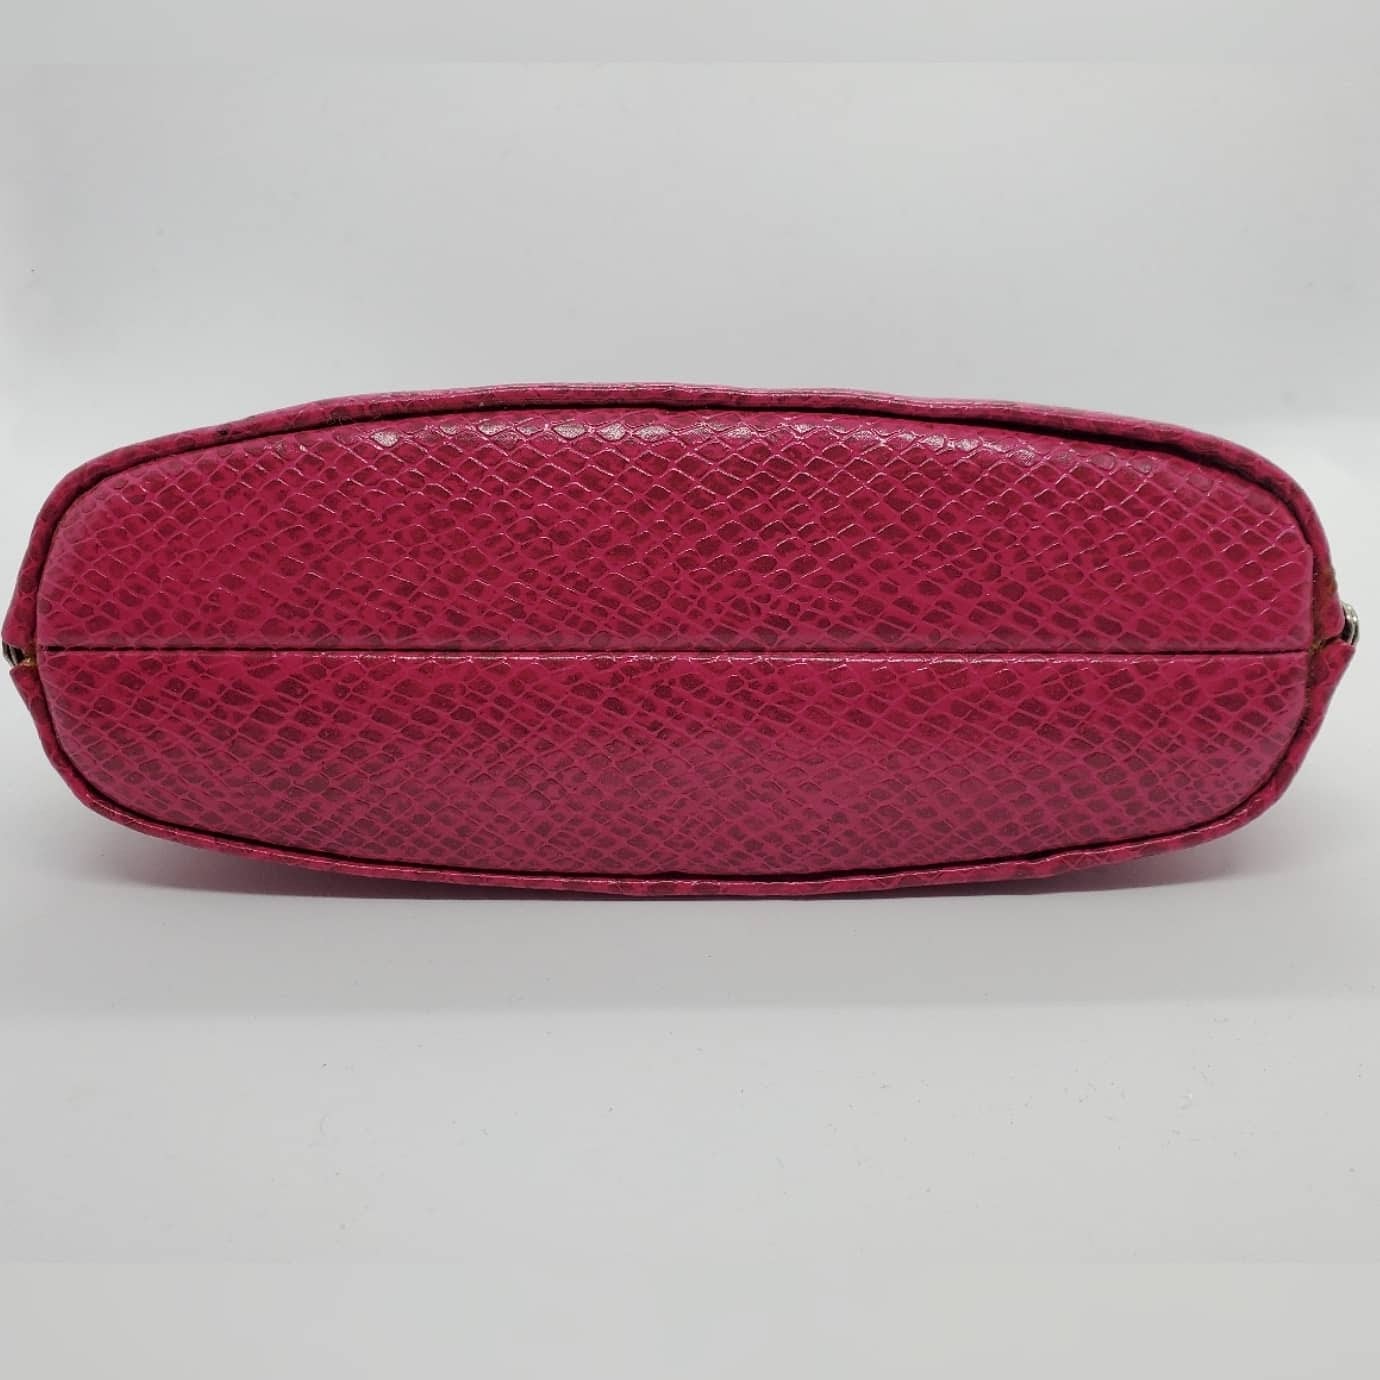 bottom view of hot pink snakeskin print handbag